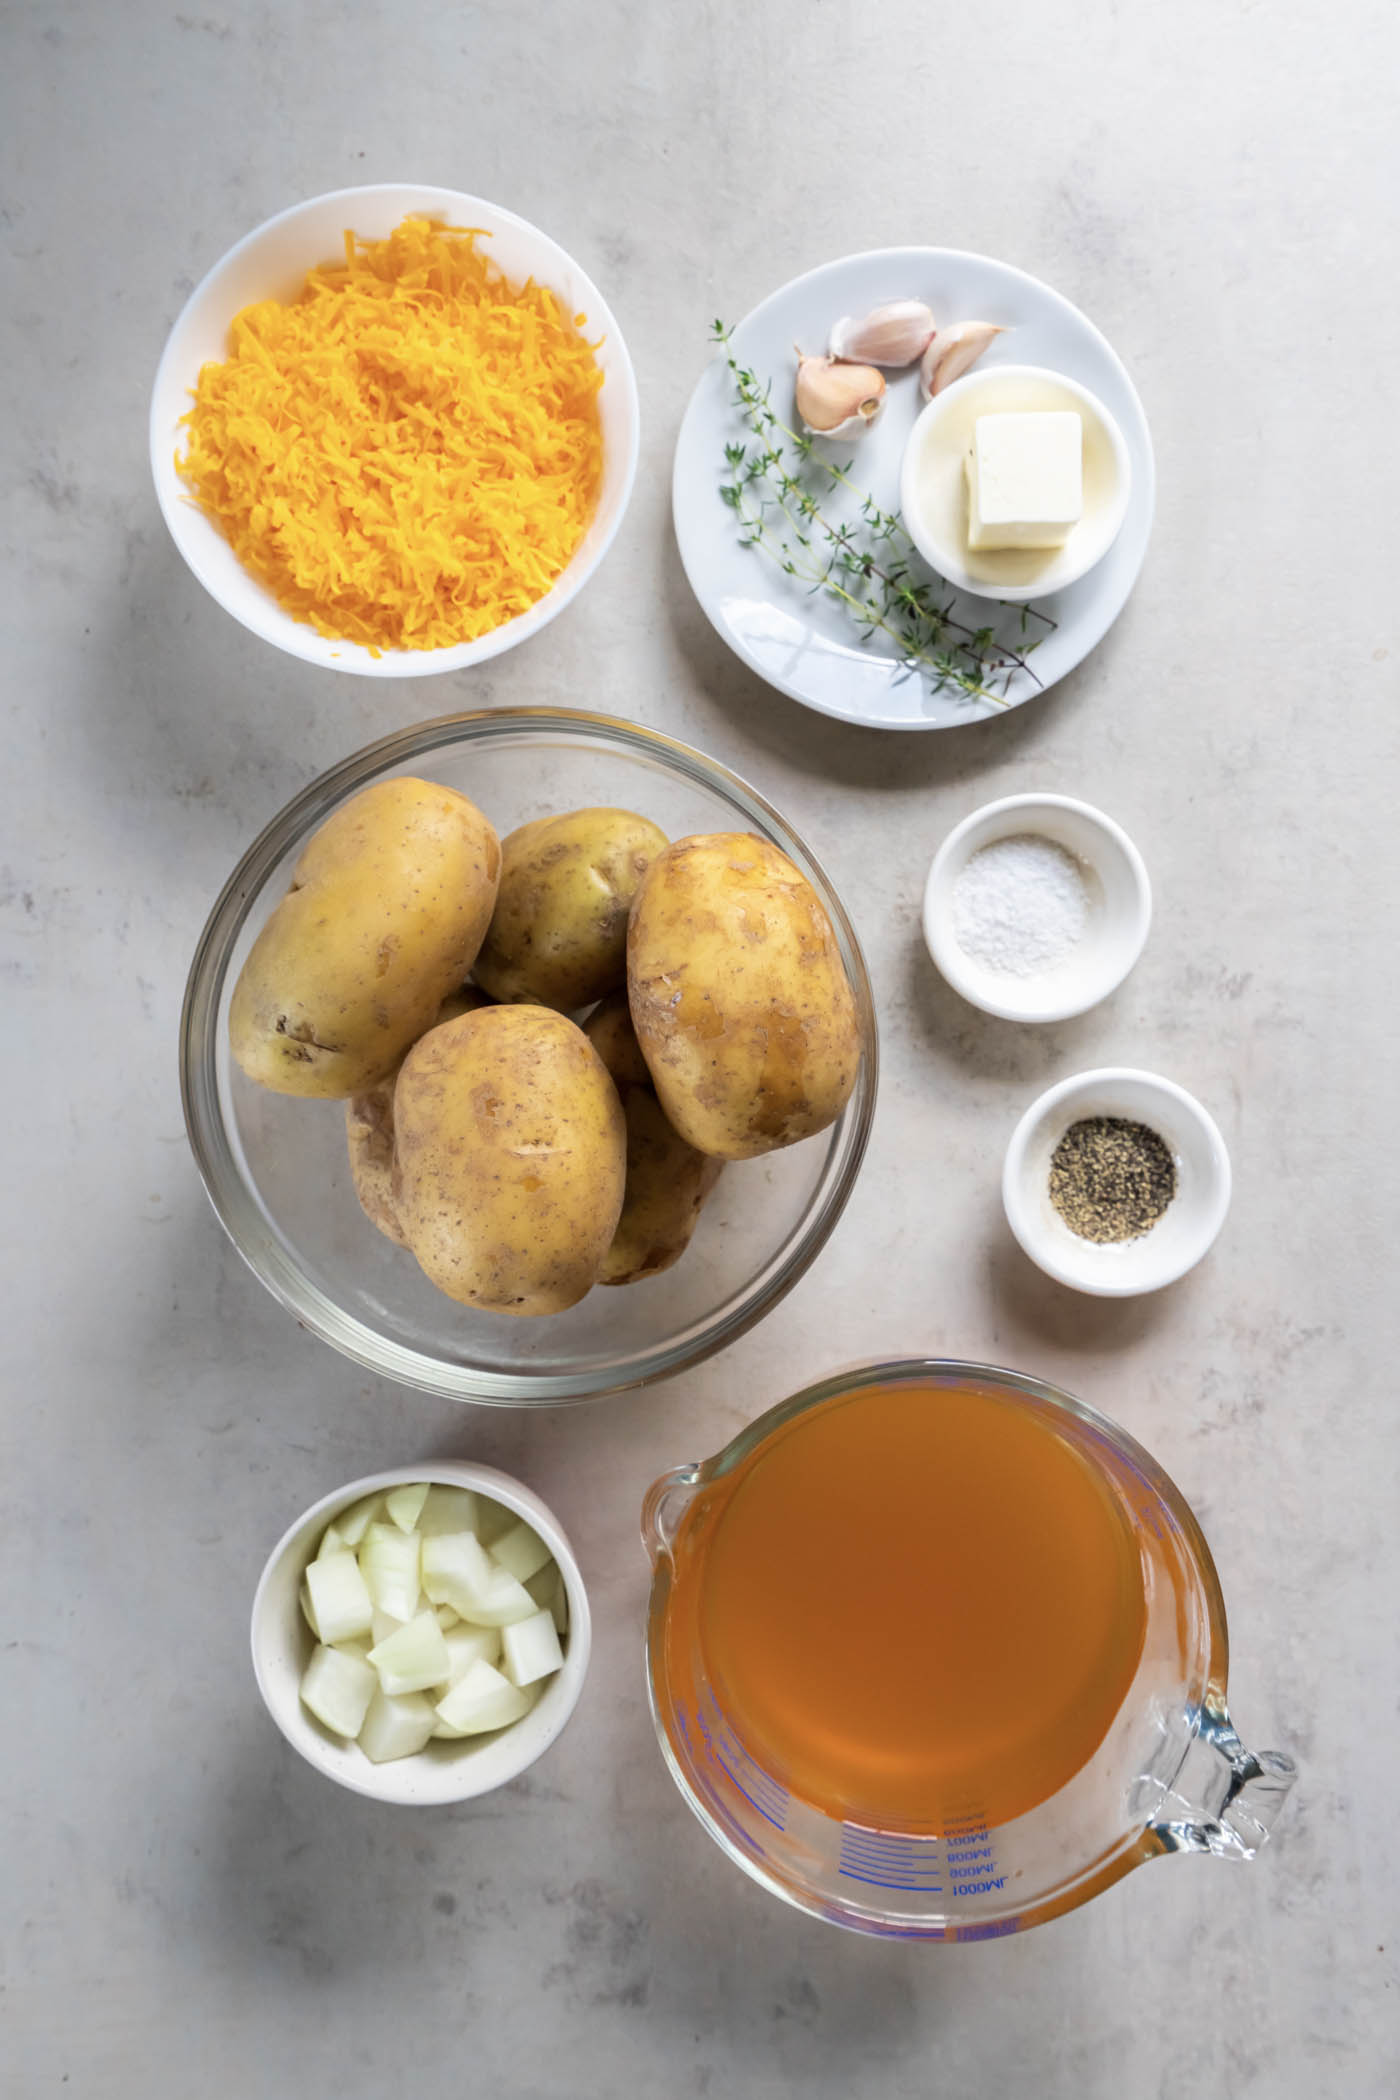 Ingredients for potato soup recipe.